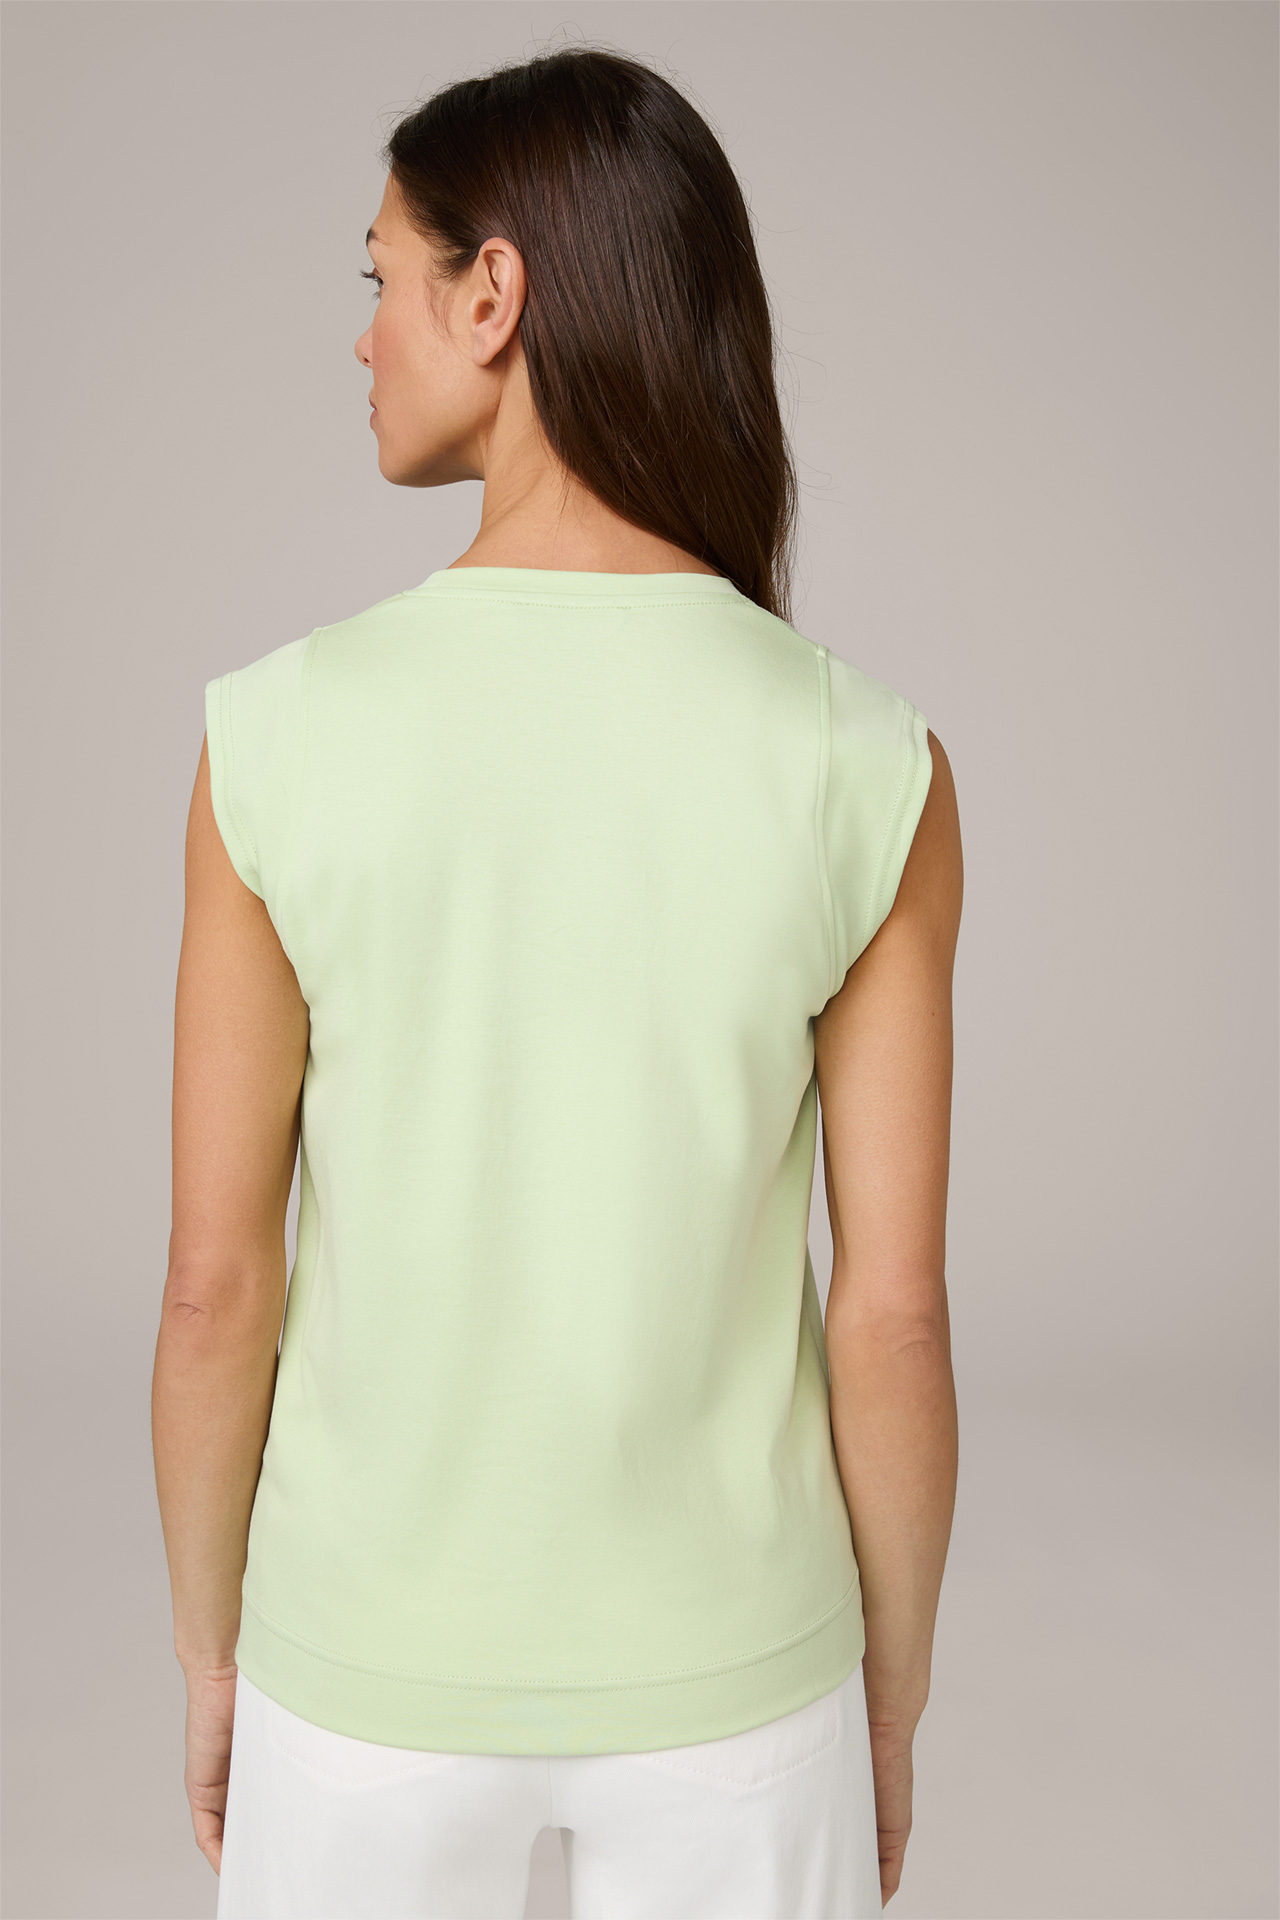 T-shirt en coton interlock à mancherons, en vert clair